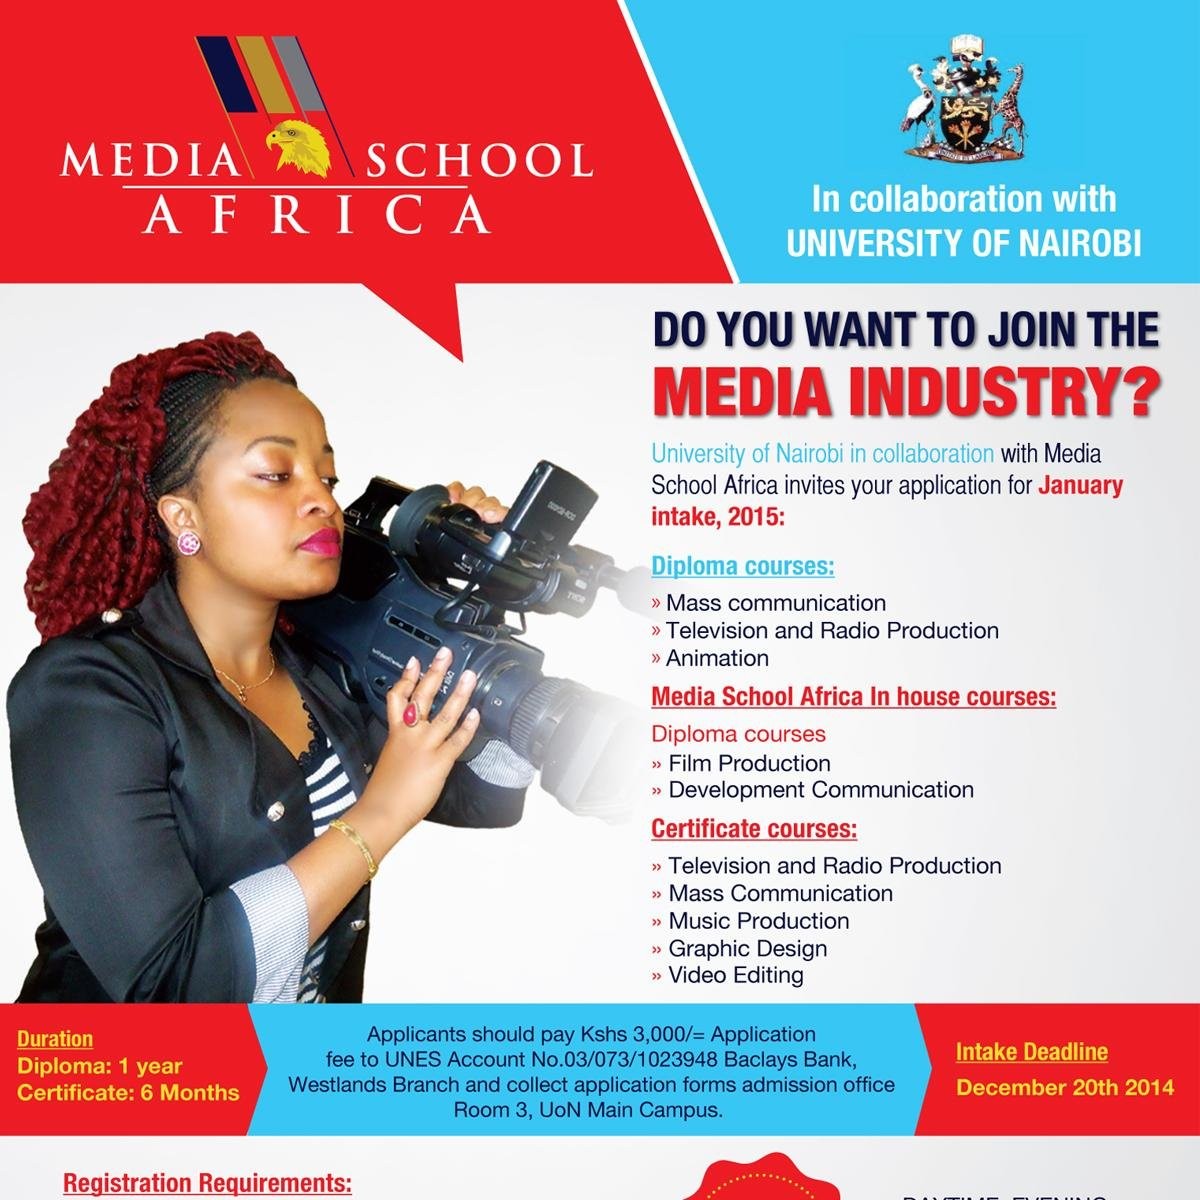 MEDIA SCHOOL AFRICA